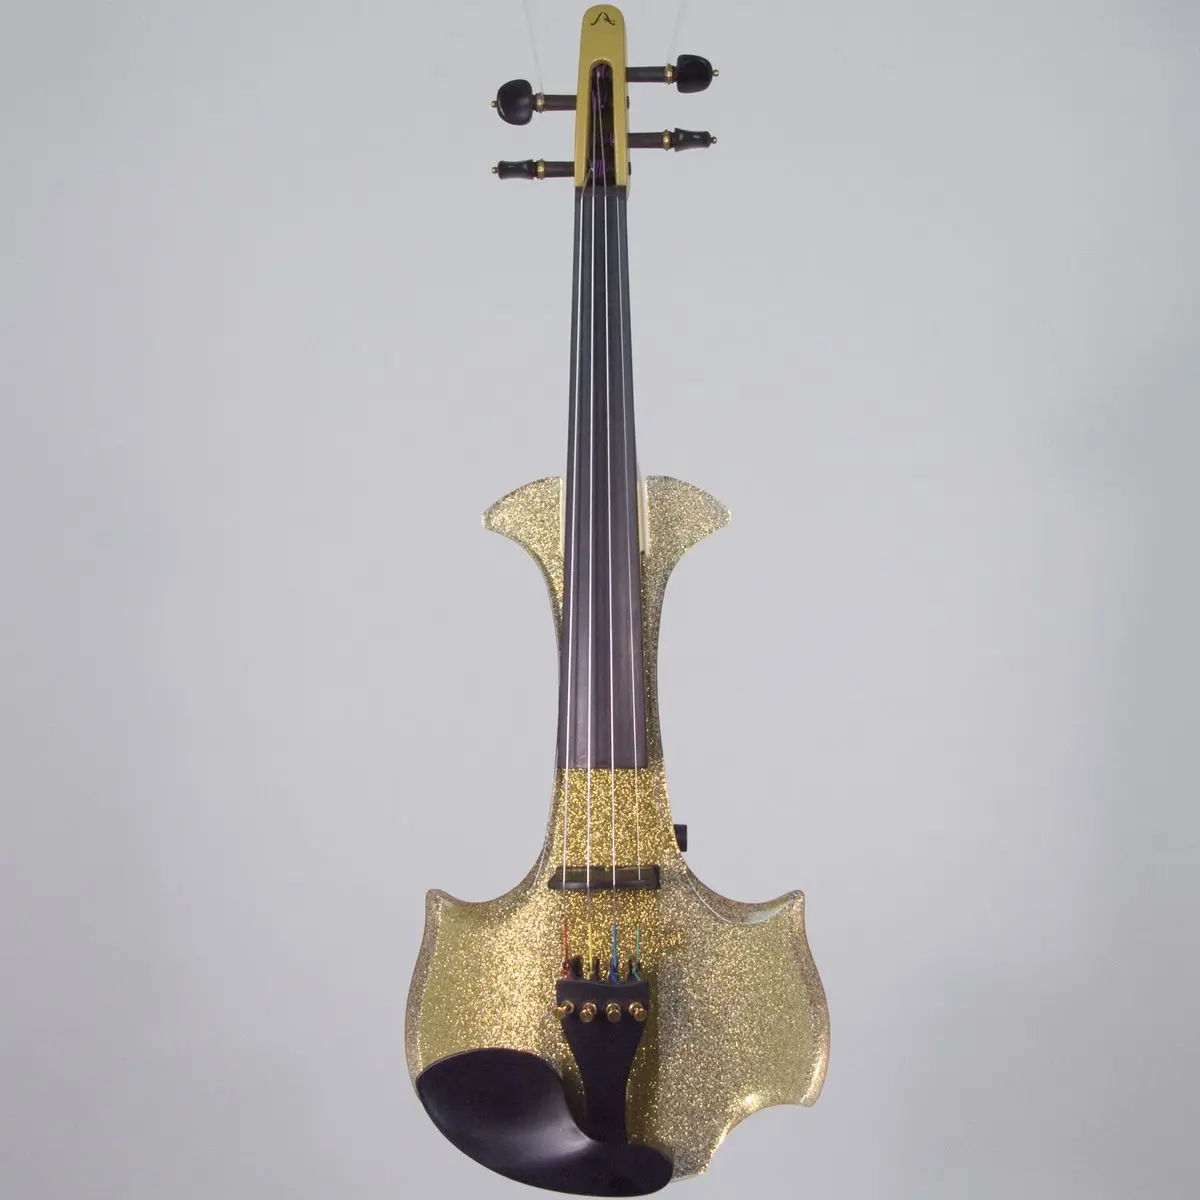 gold violin - How do you take care of a golden violin